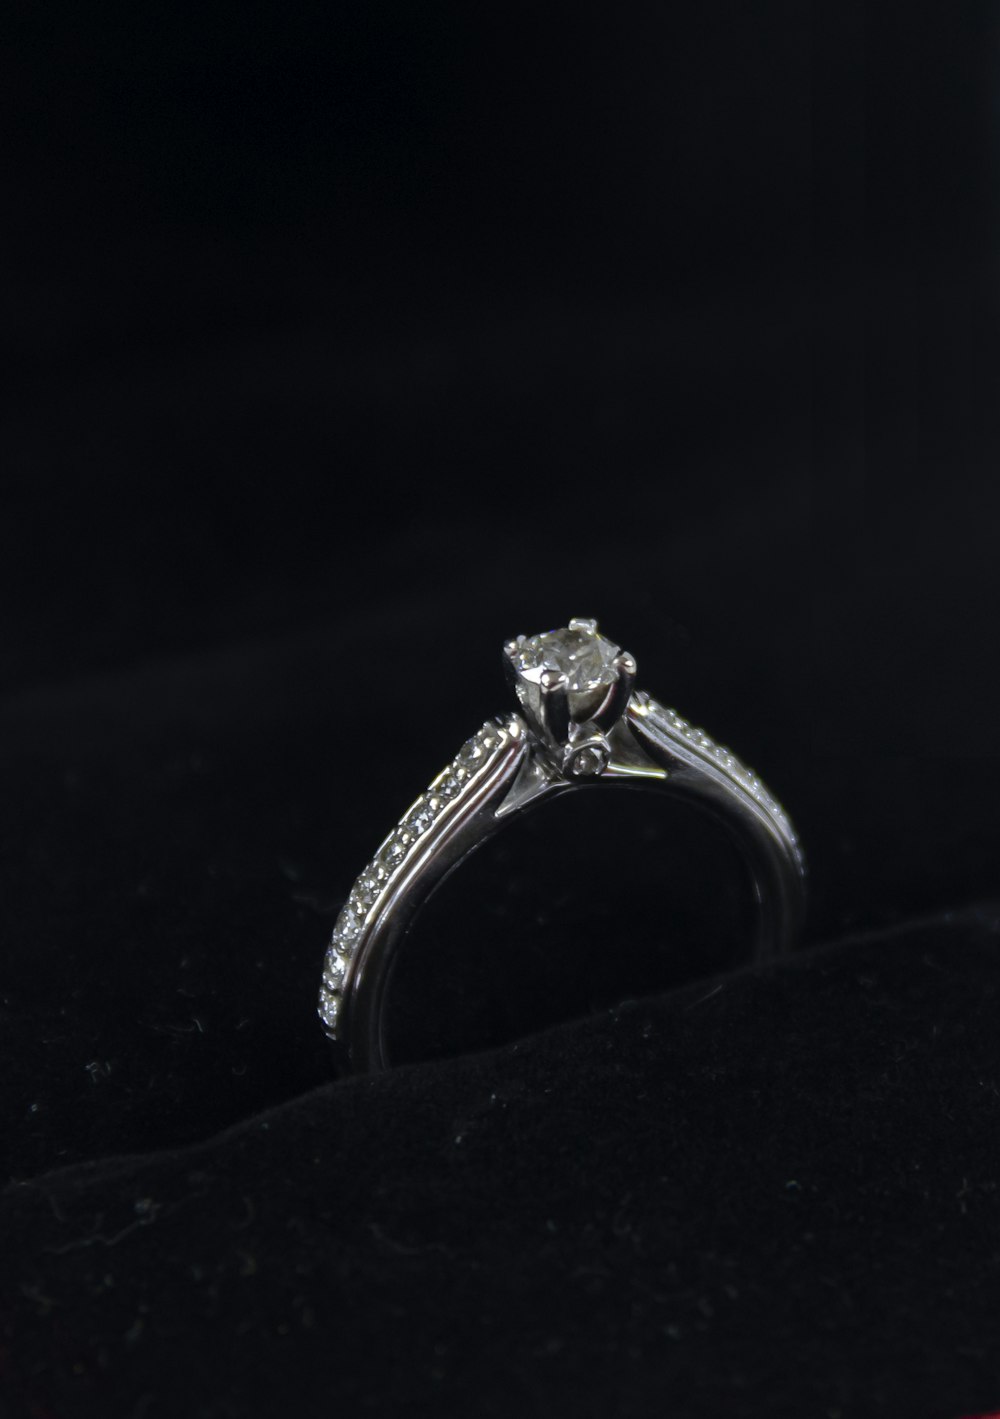 silver diamond ring on black textile